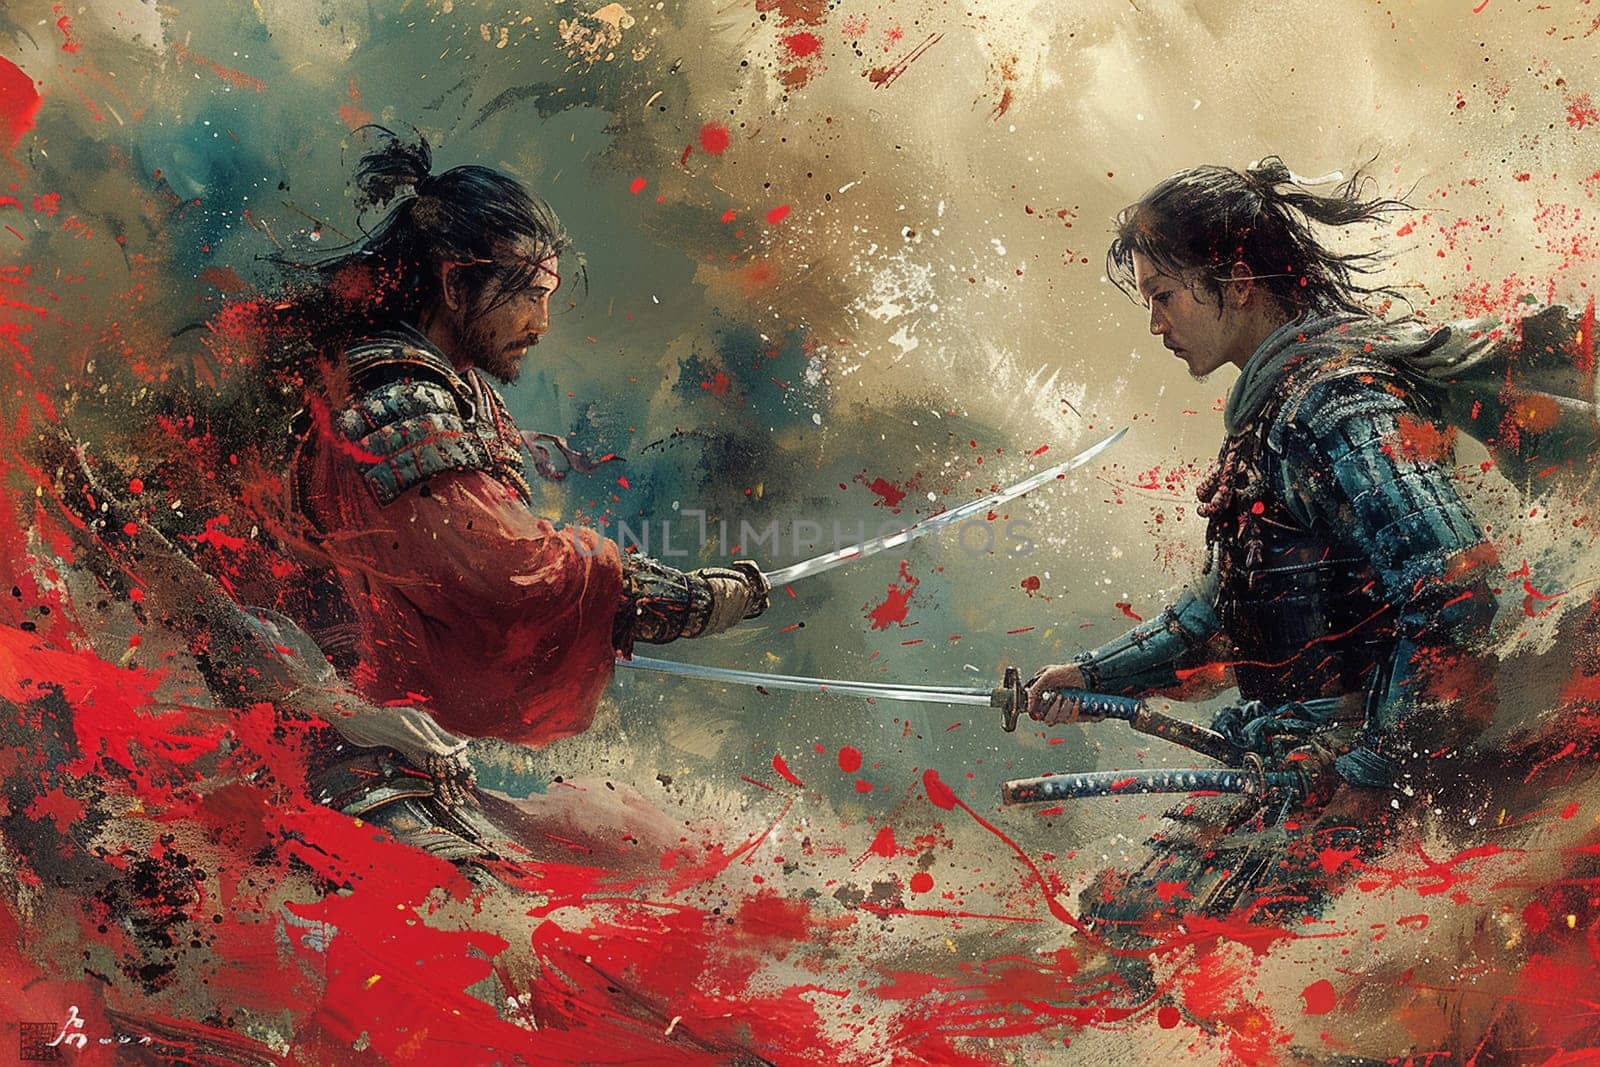 Duel between mythic samurai warriors by Benzoix